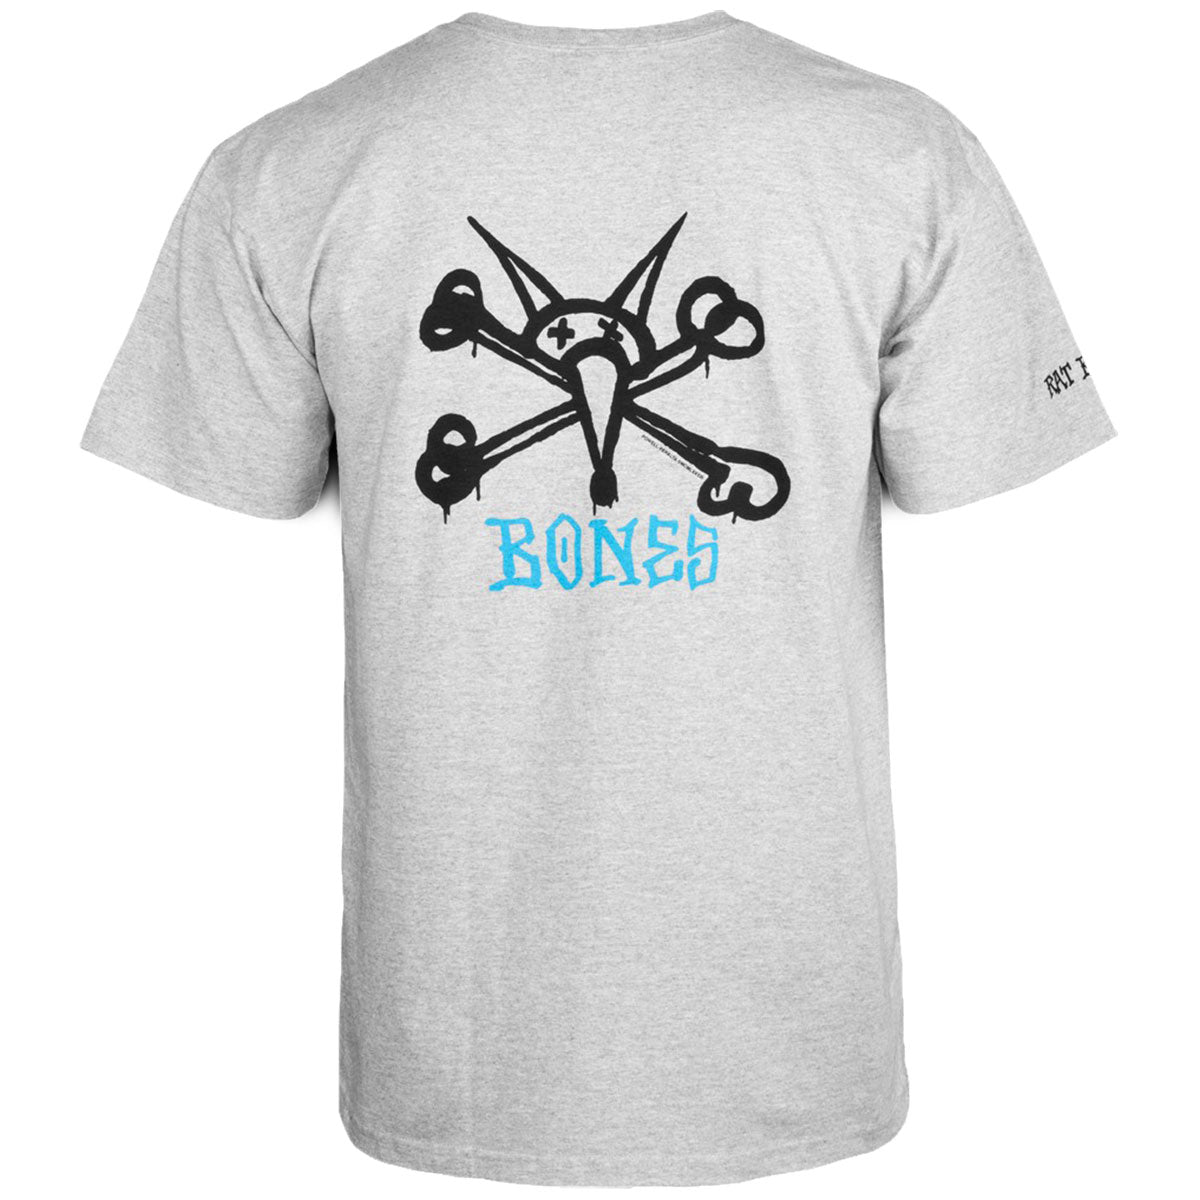 Powell-Peralta Rat Bones T-Shirt - Gray image 1